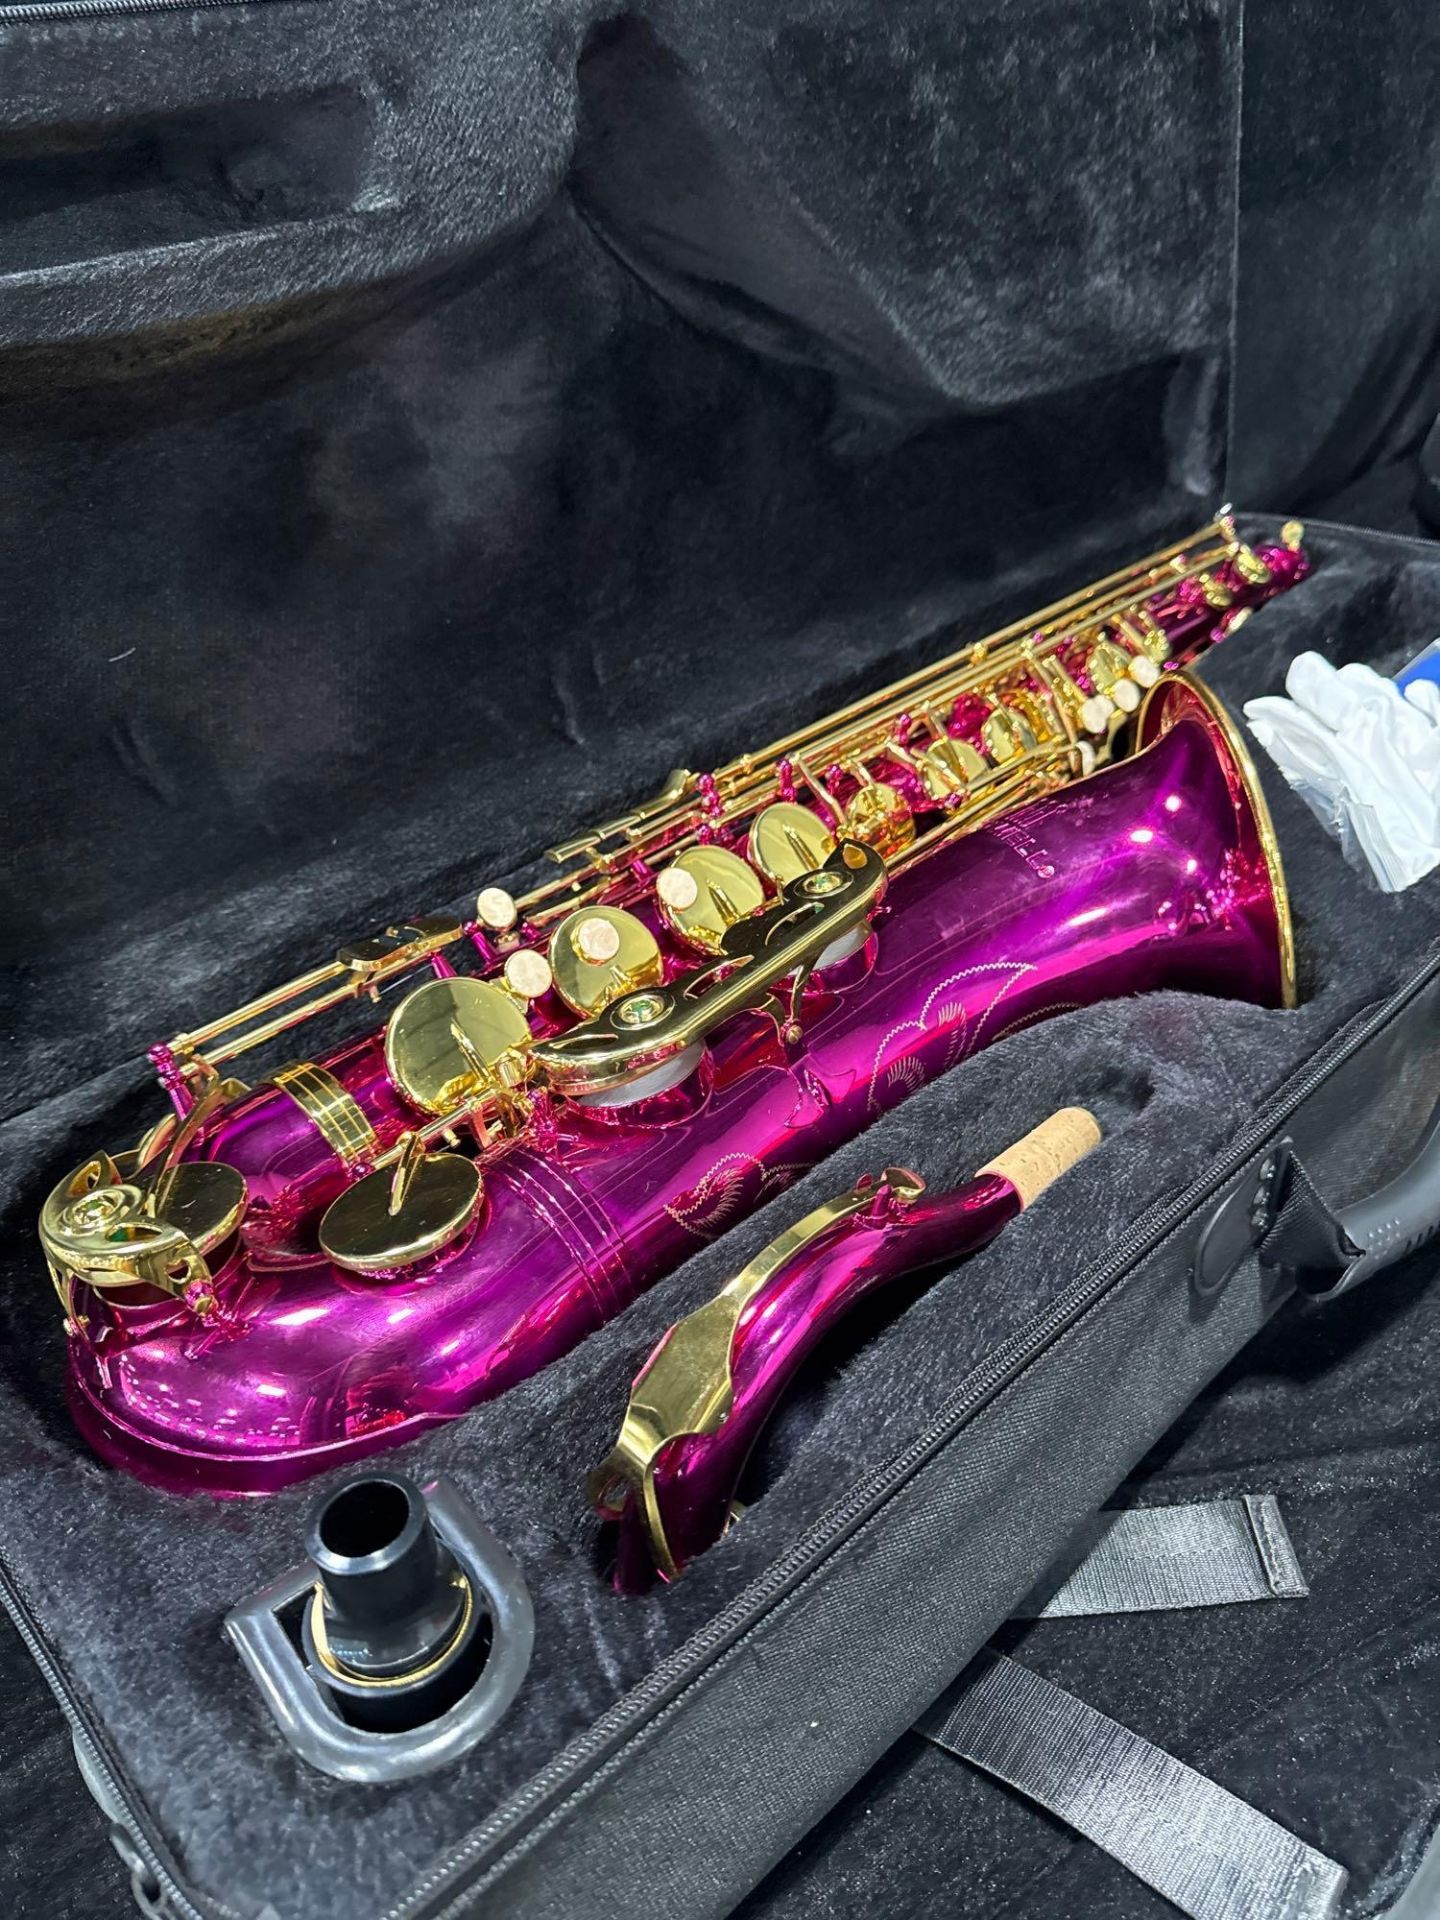 tenor saxophone - Image 2 of 3